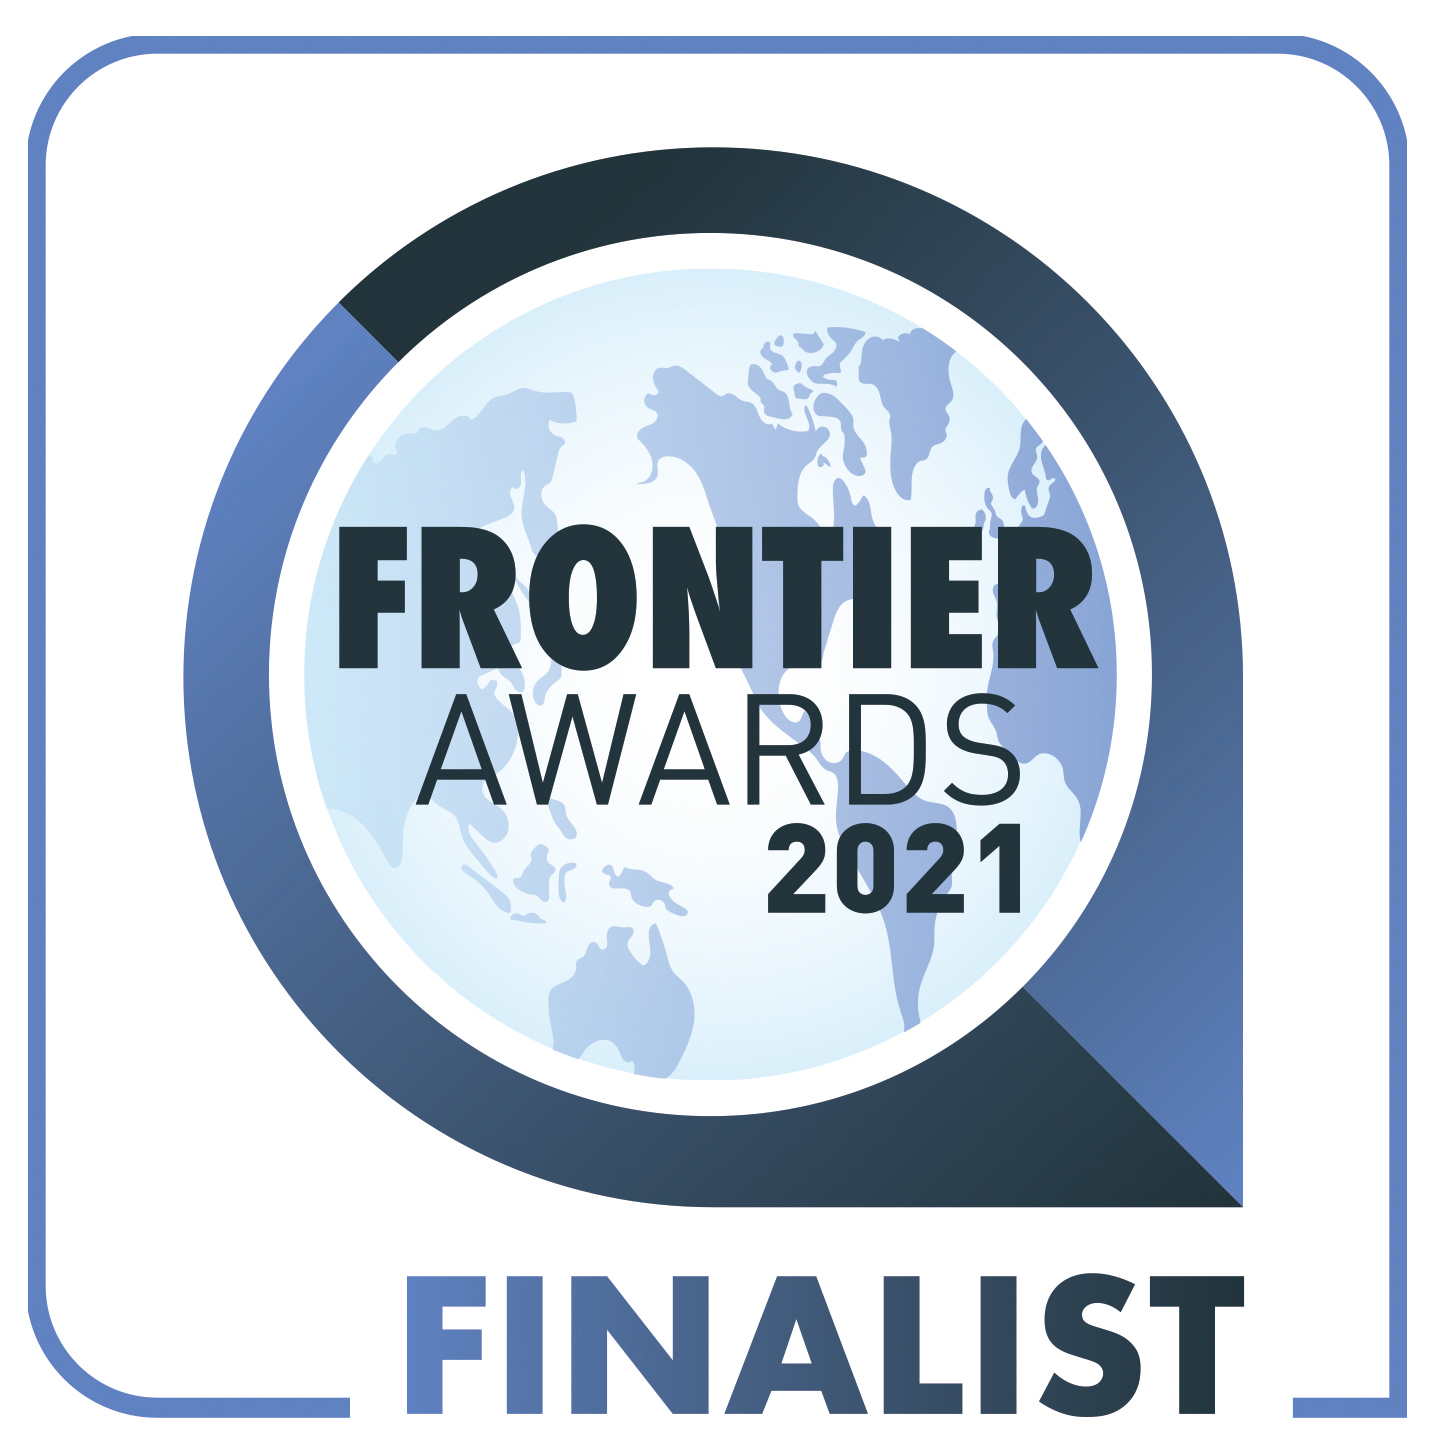 Frontier Awards 2021 Finalist logo